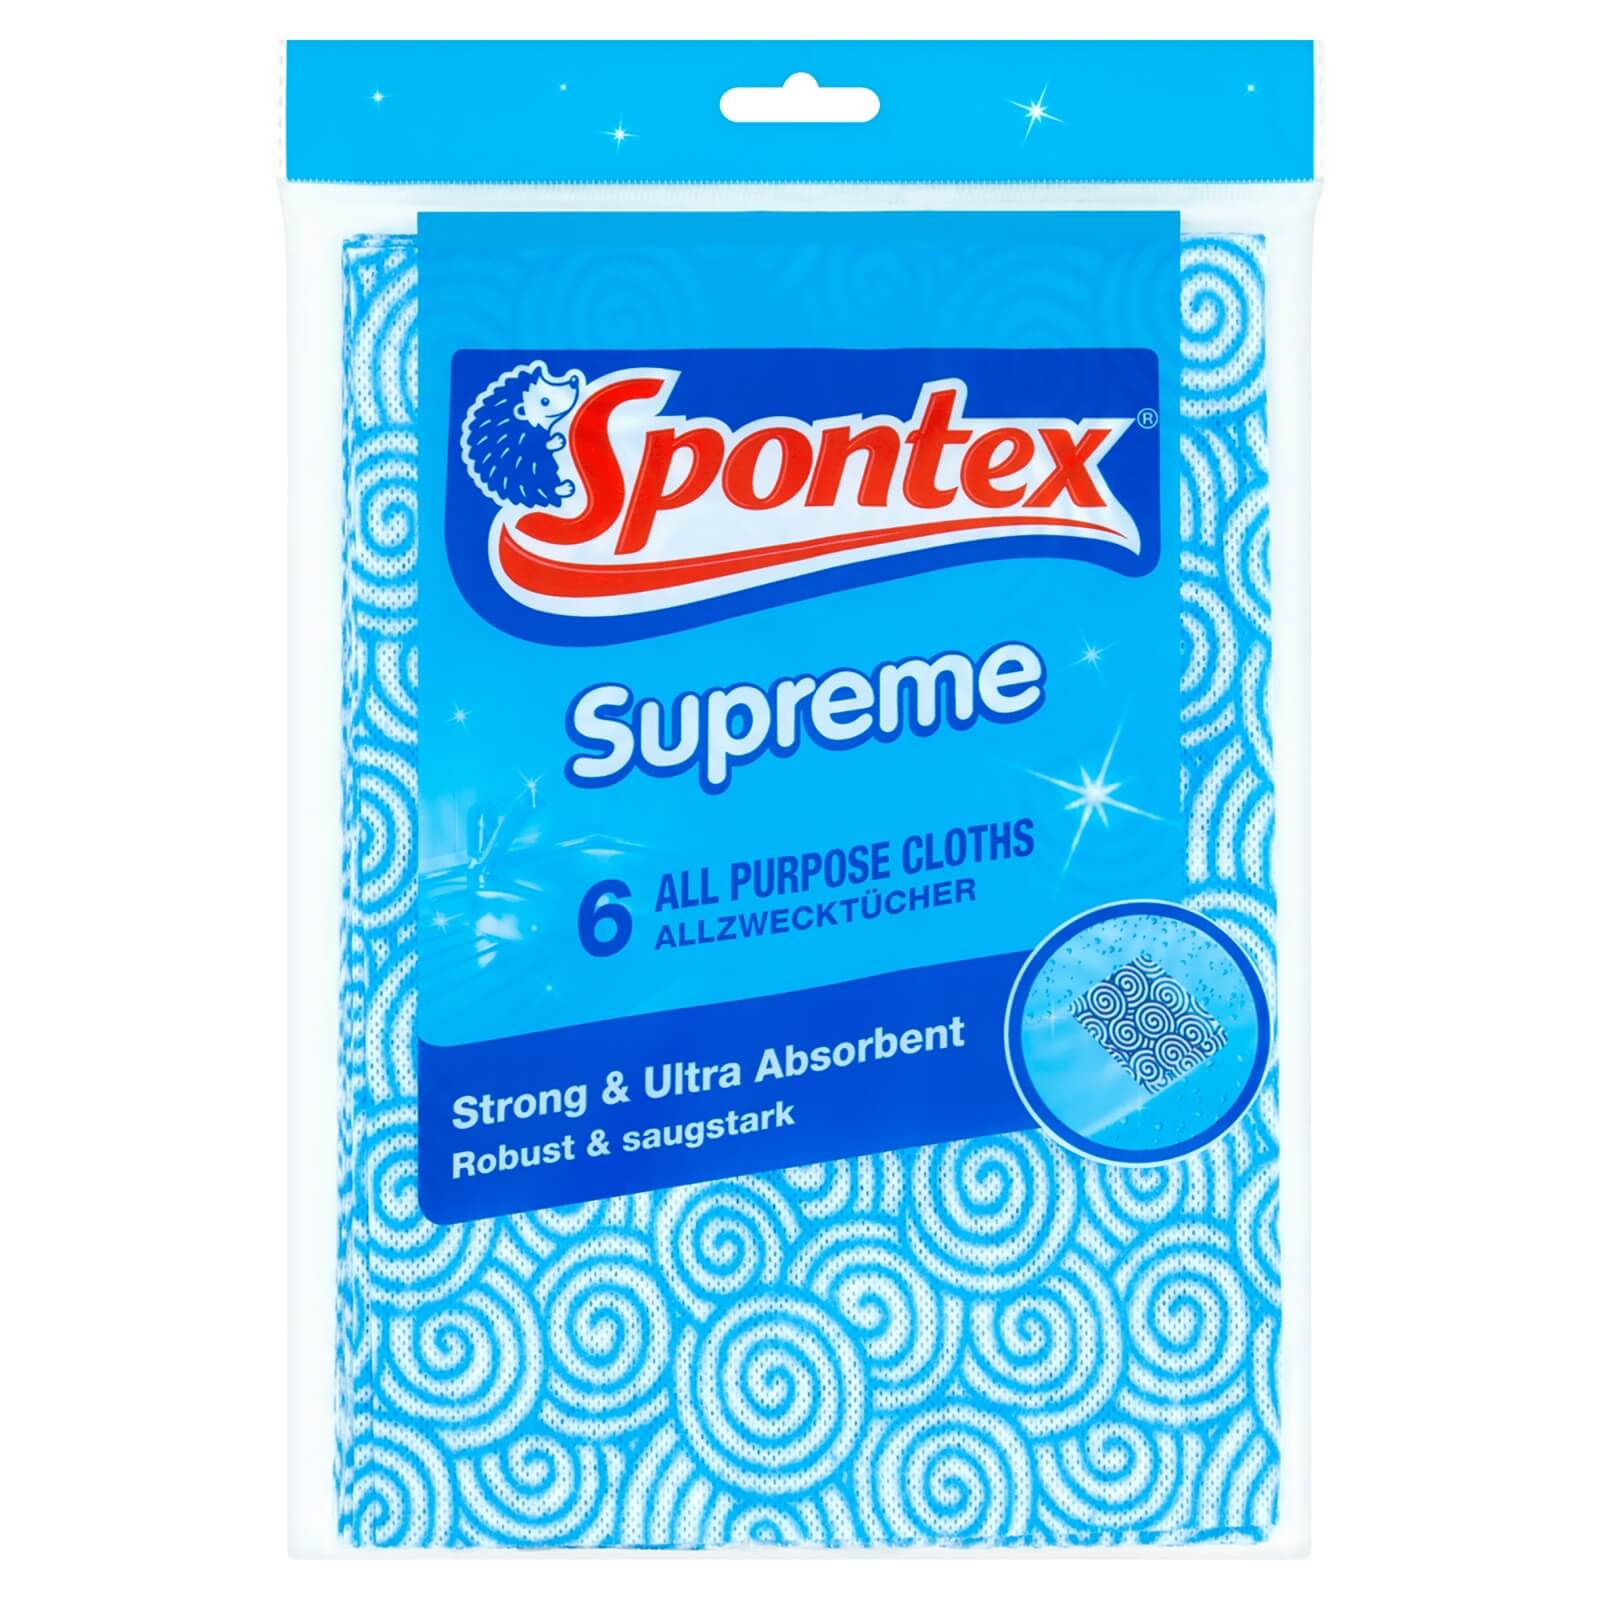 Spontex Supreme All Purpose Cloth 6 Pack